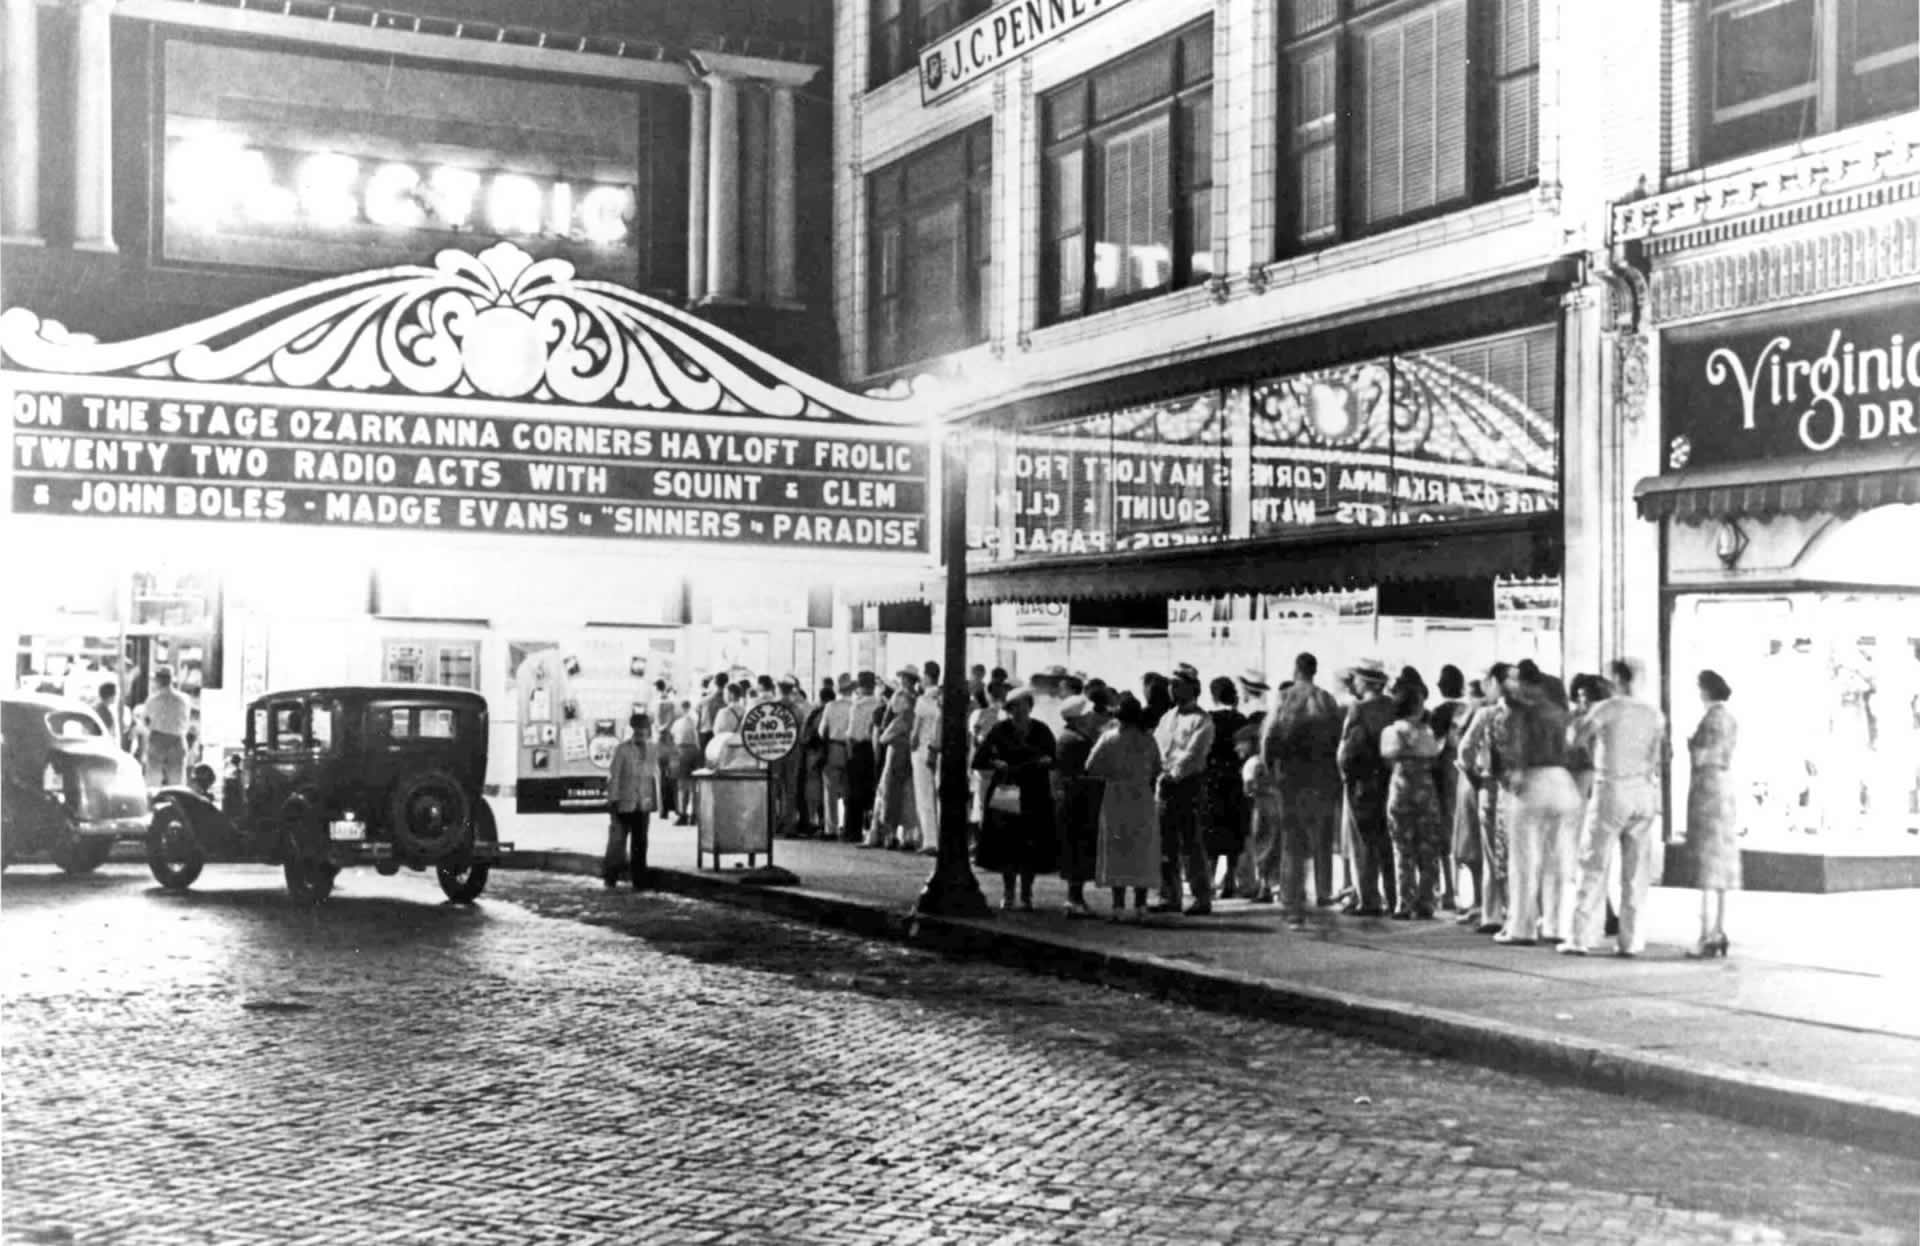 1930 Electric Theatre